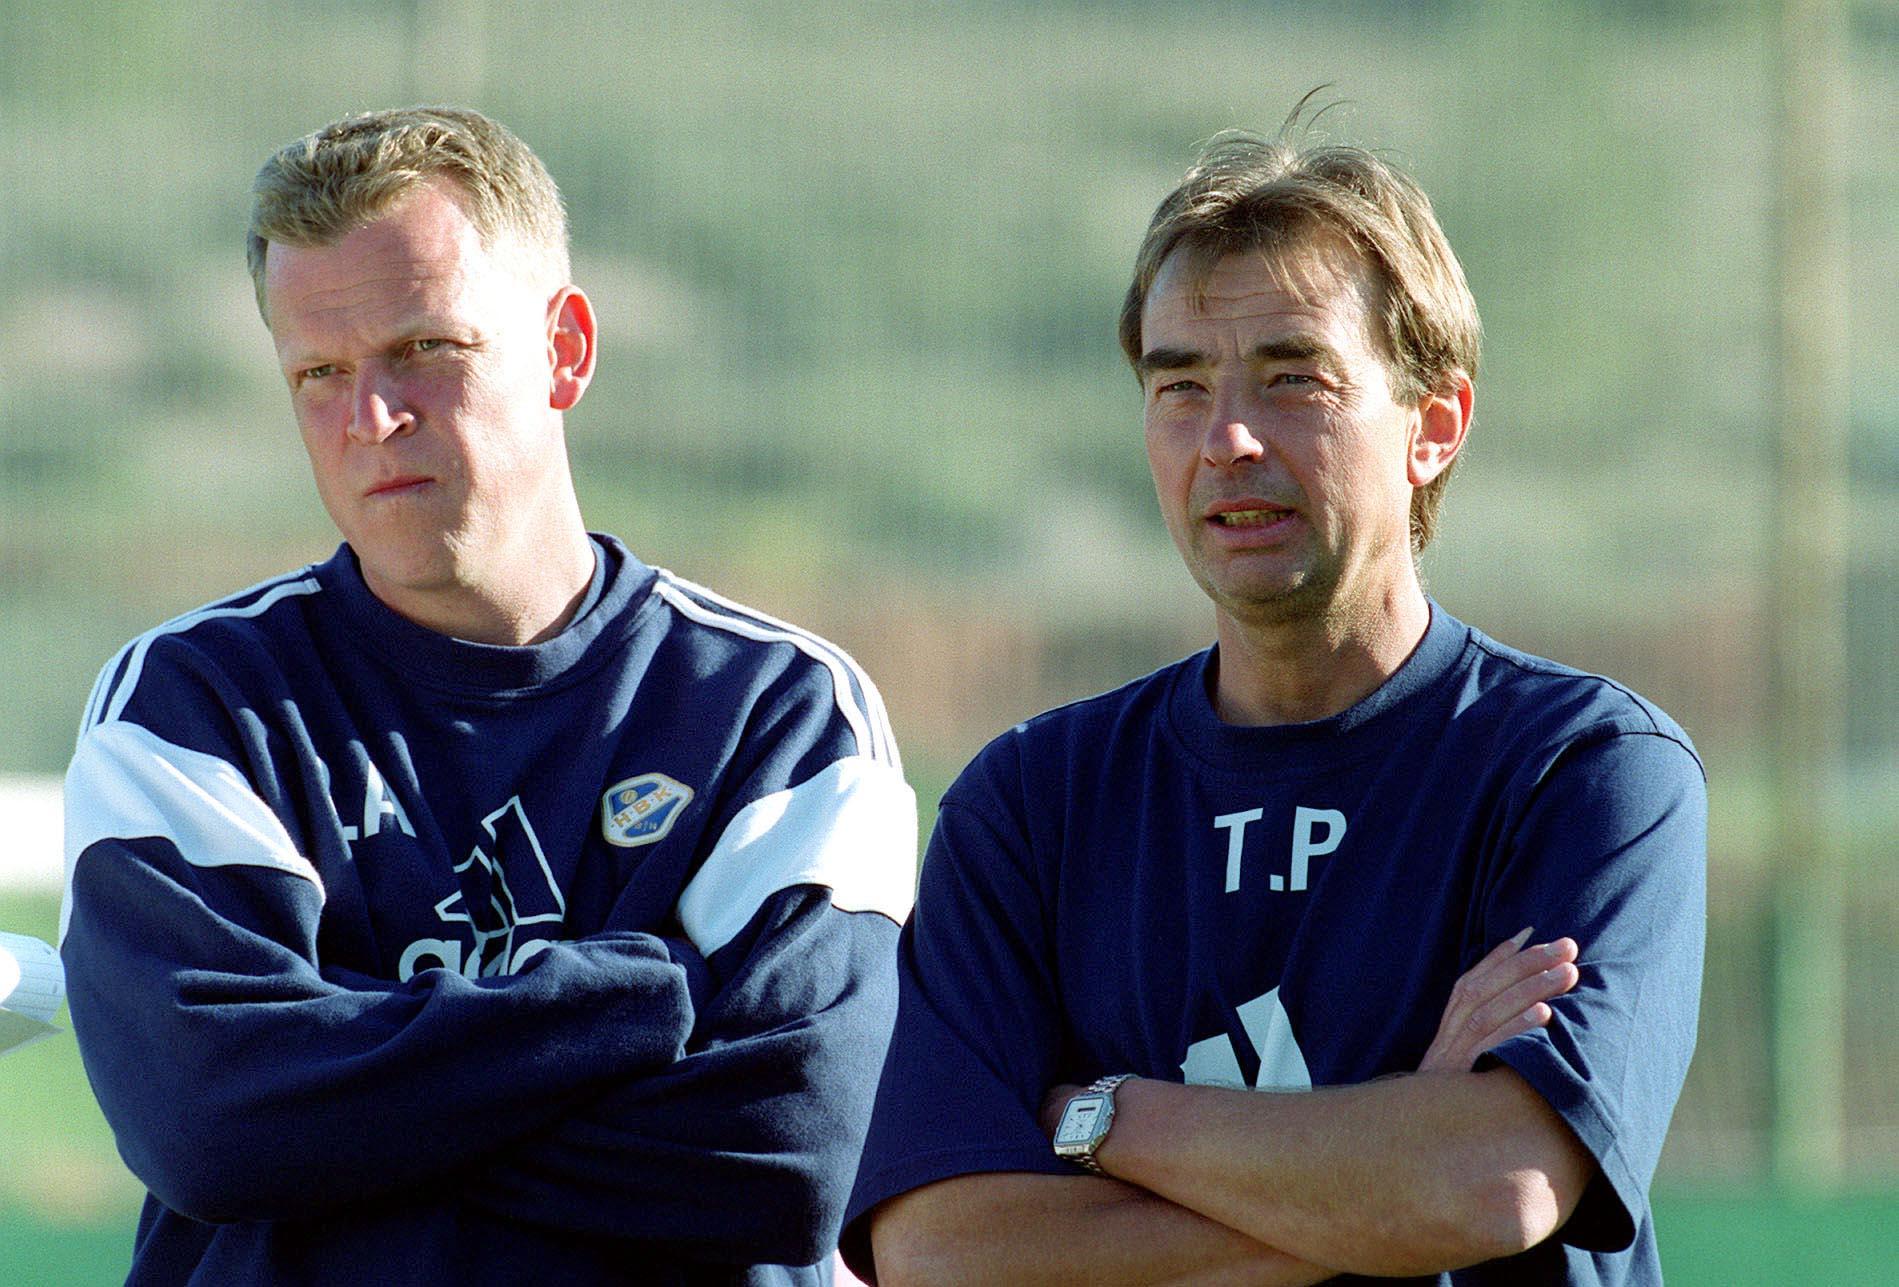 2000-2003 var Janne Andersson andretränare under Tom Prahl i Halmstad.